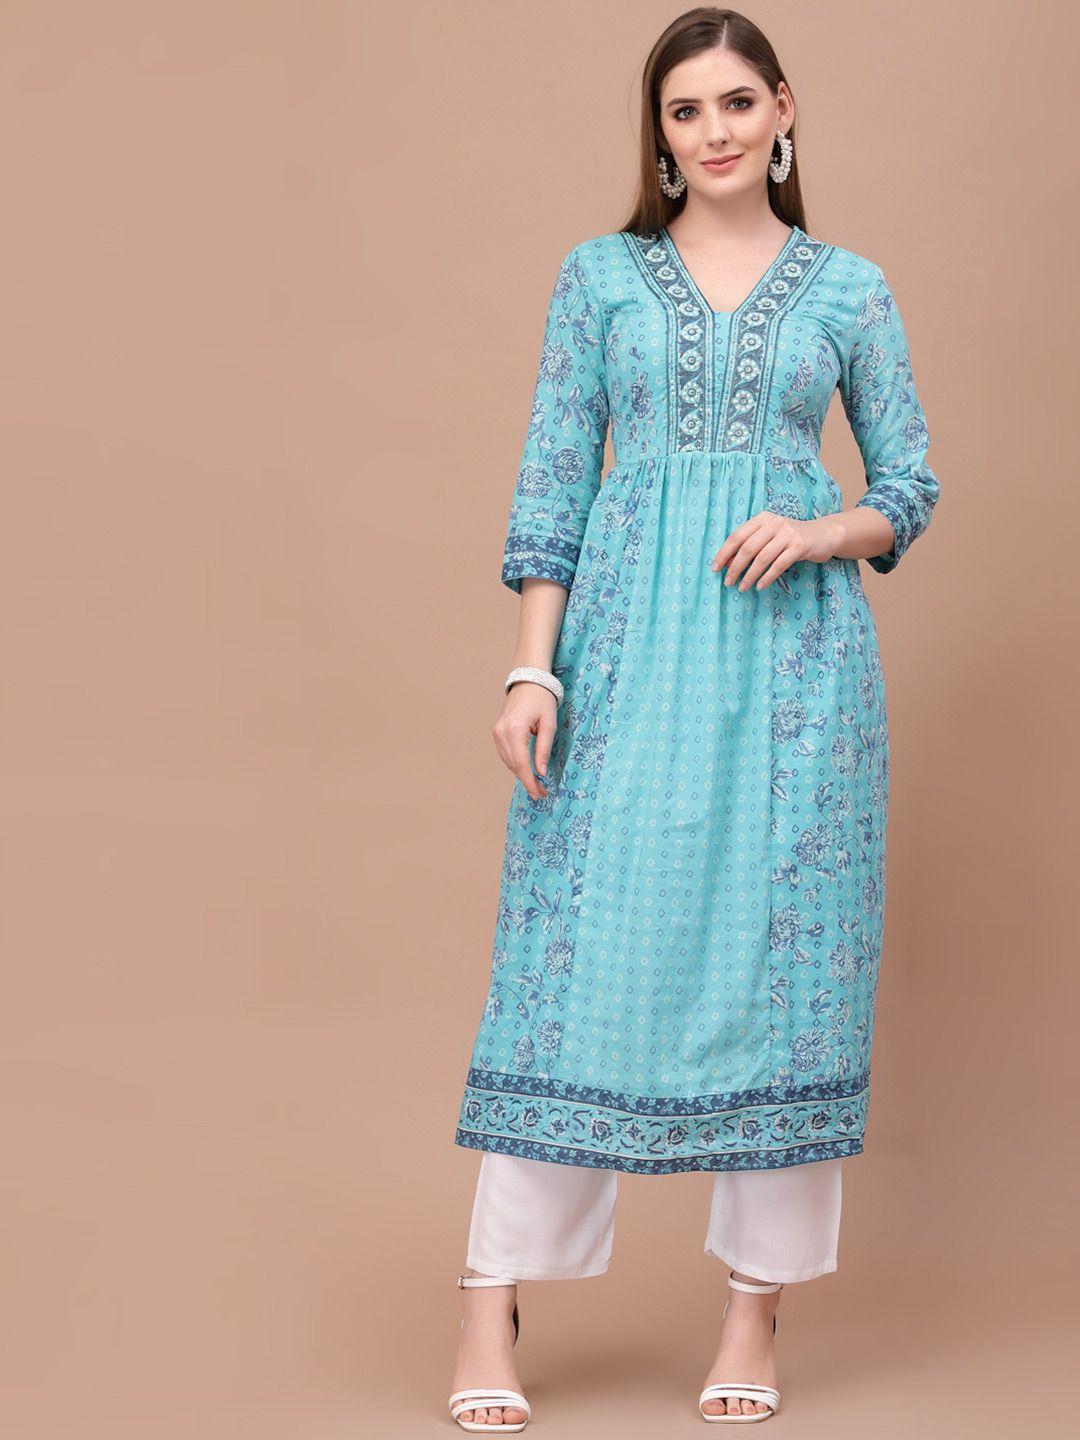 prakrtee women's turquoise blue geometric printed thread work kurta